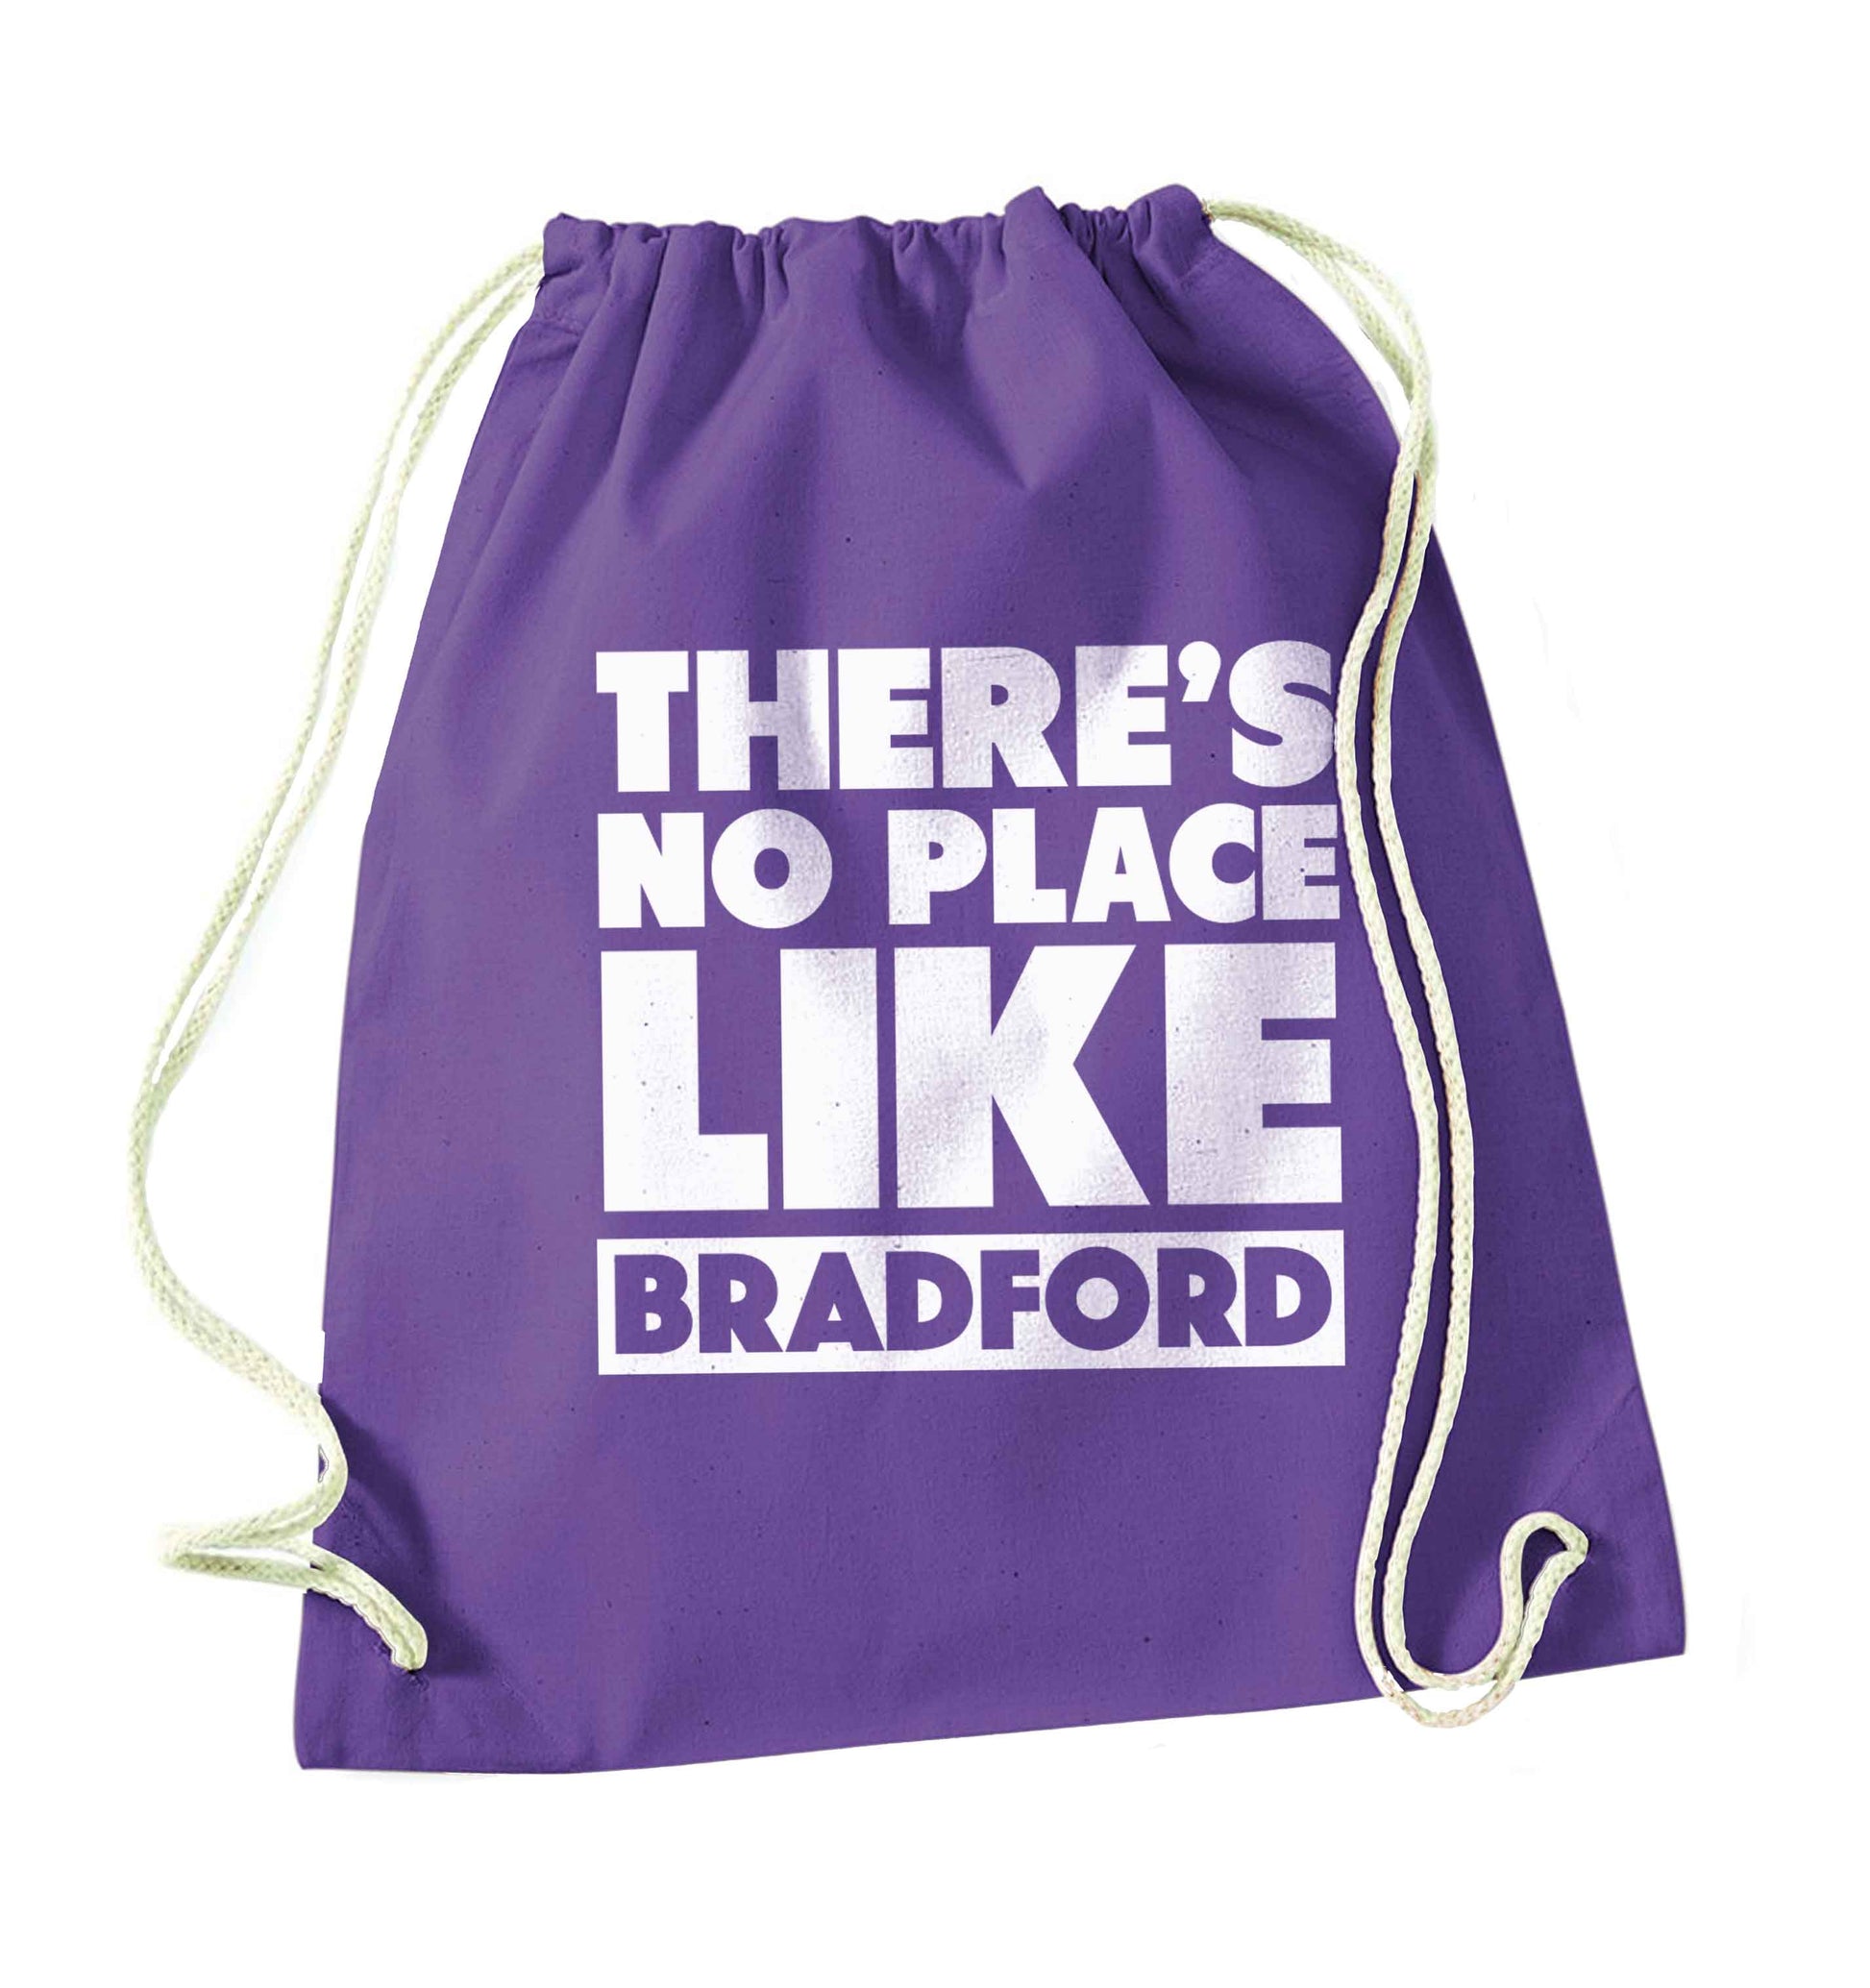 There's no place like Bradford purple drawstring bag